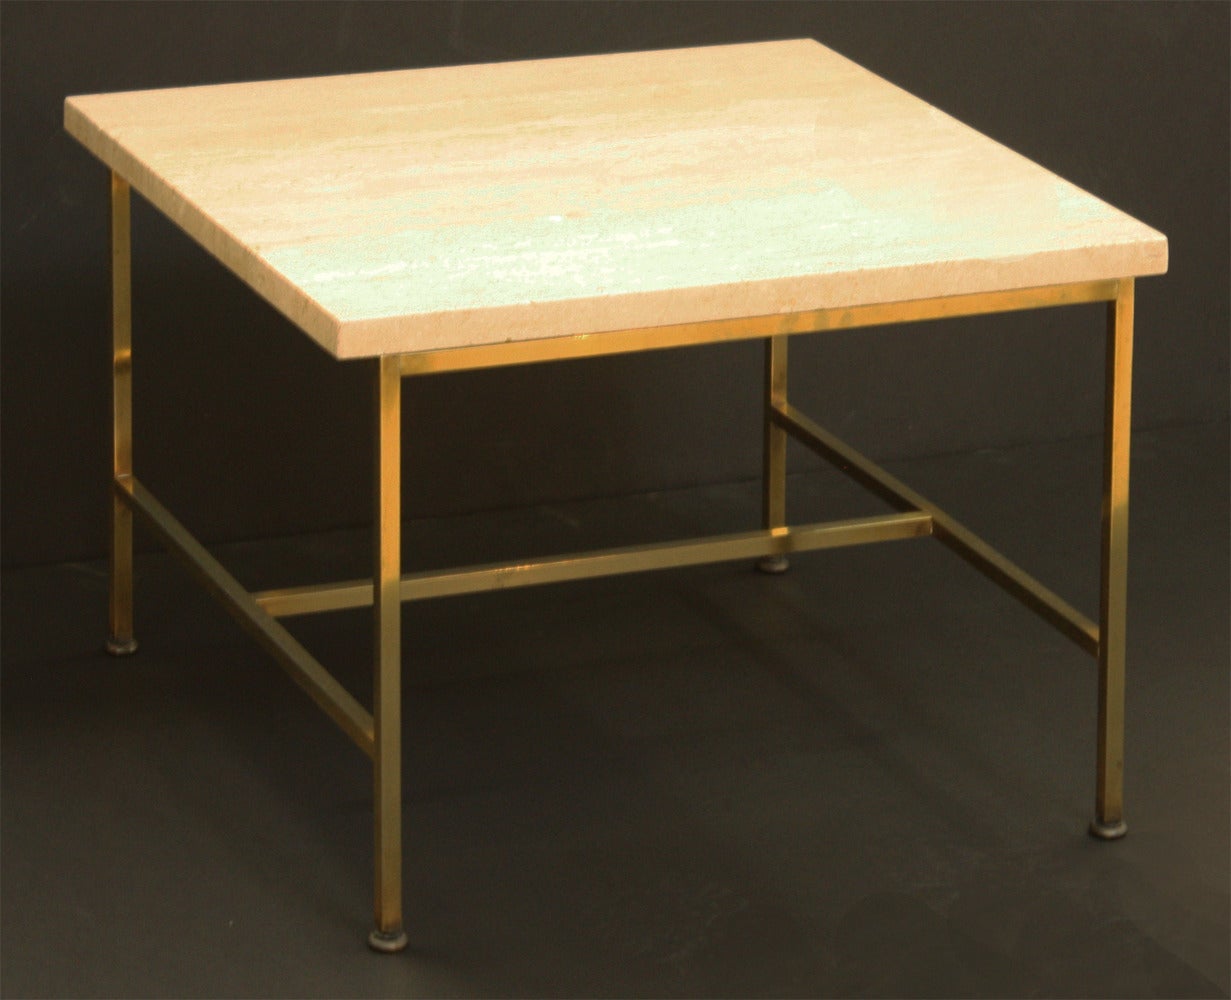 Mid-Century Modern End Table by Paul McCobb (1917-1969) for Calvin